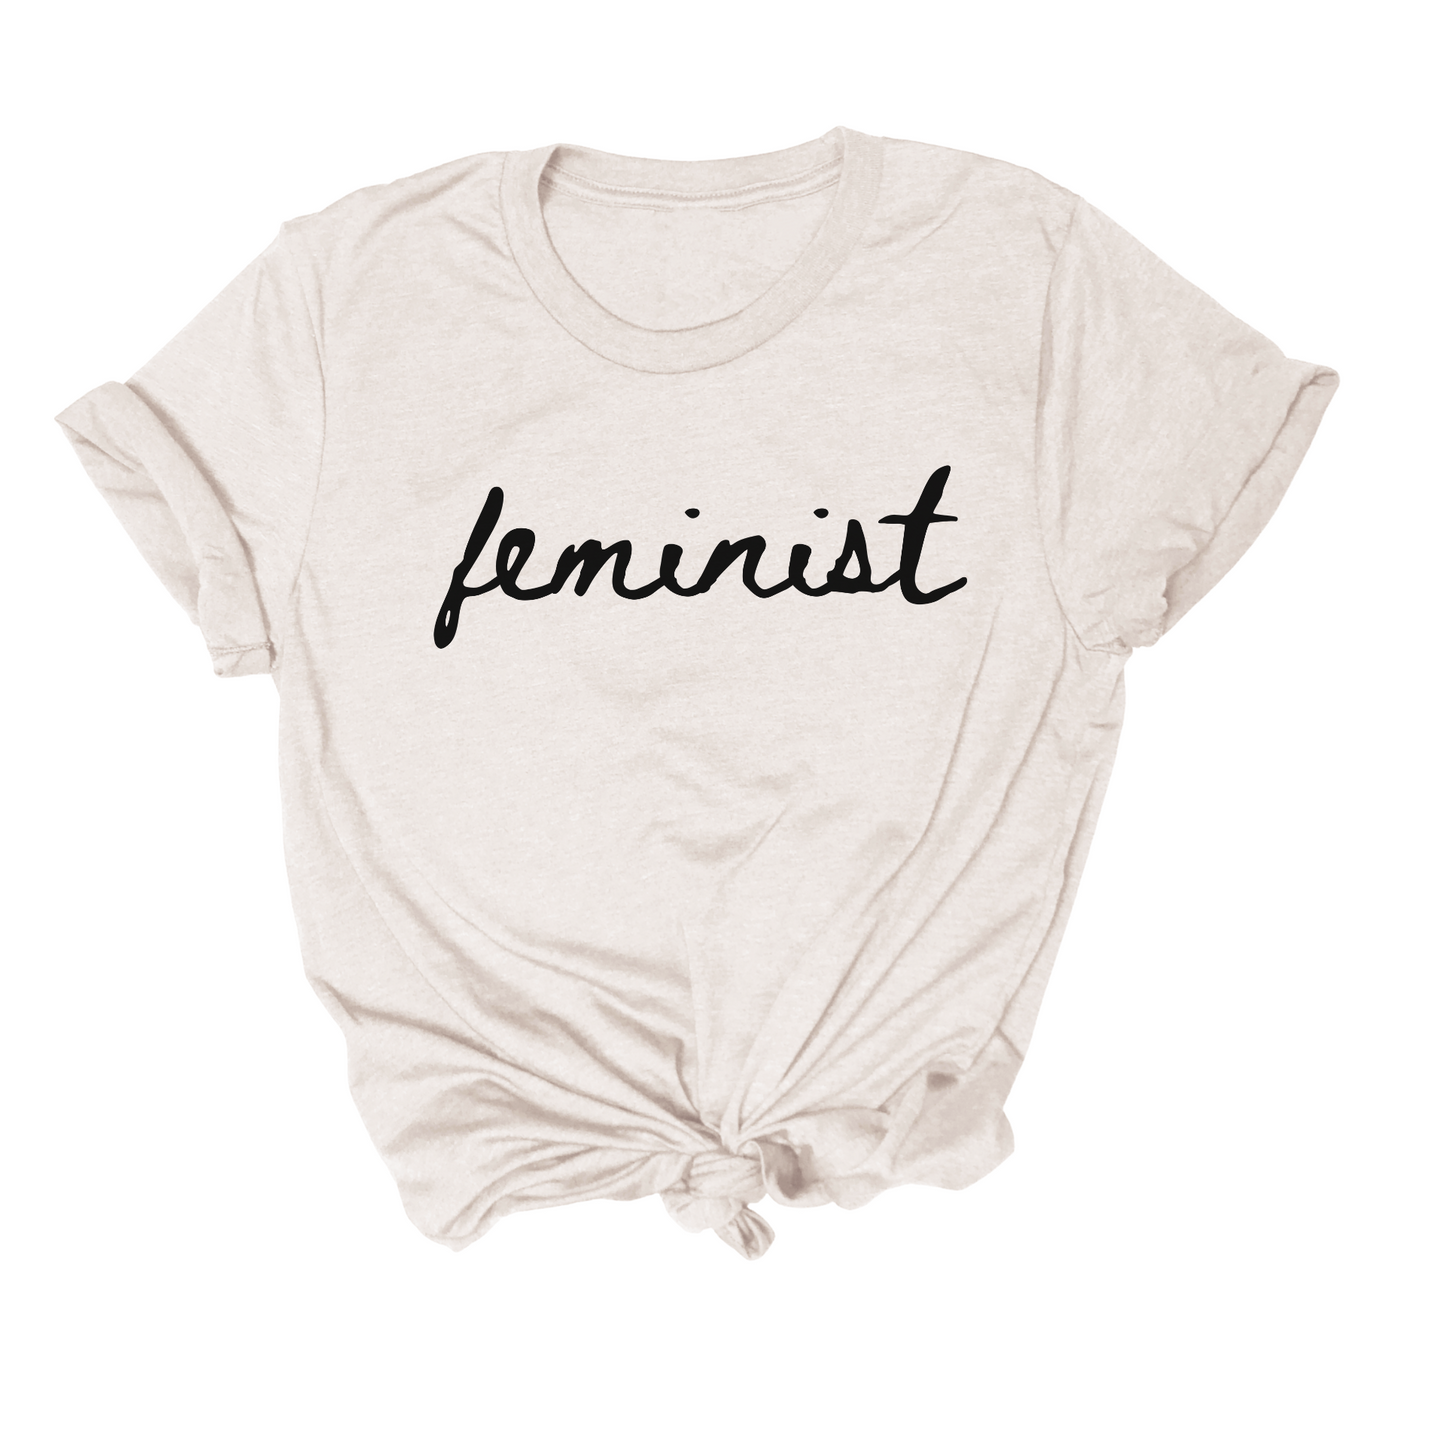 feminism themed tshirt that says feminist